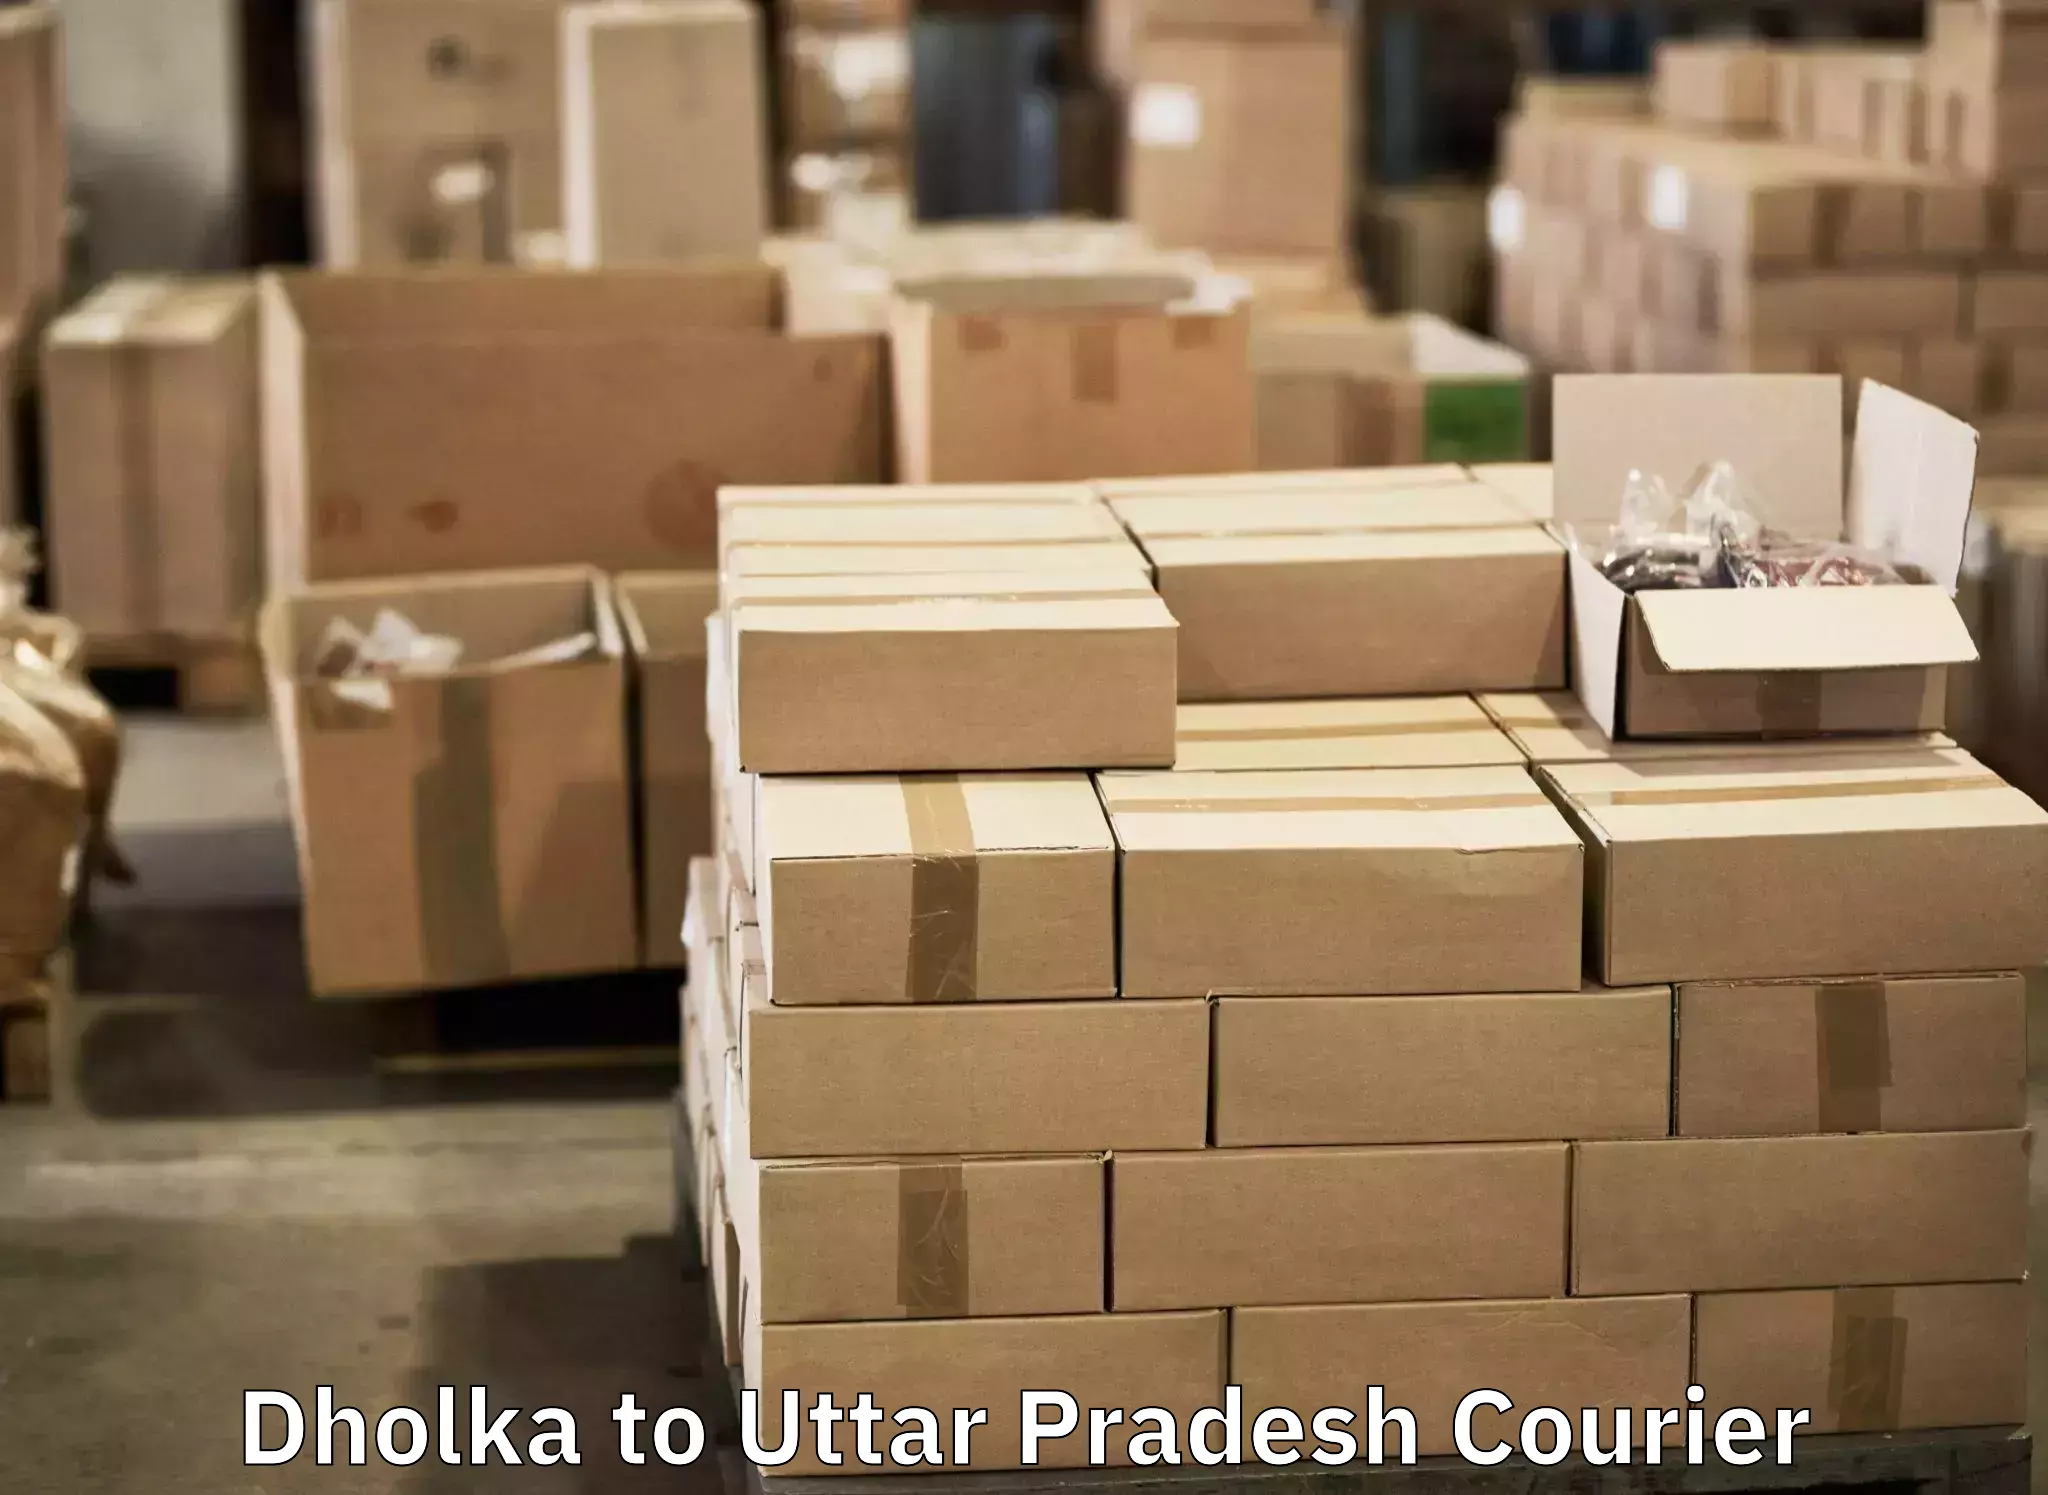 Baggage relocation service Dholka to Noida